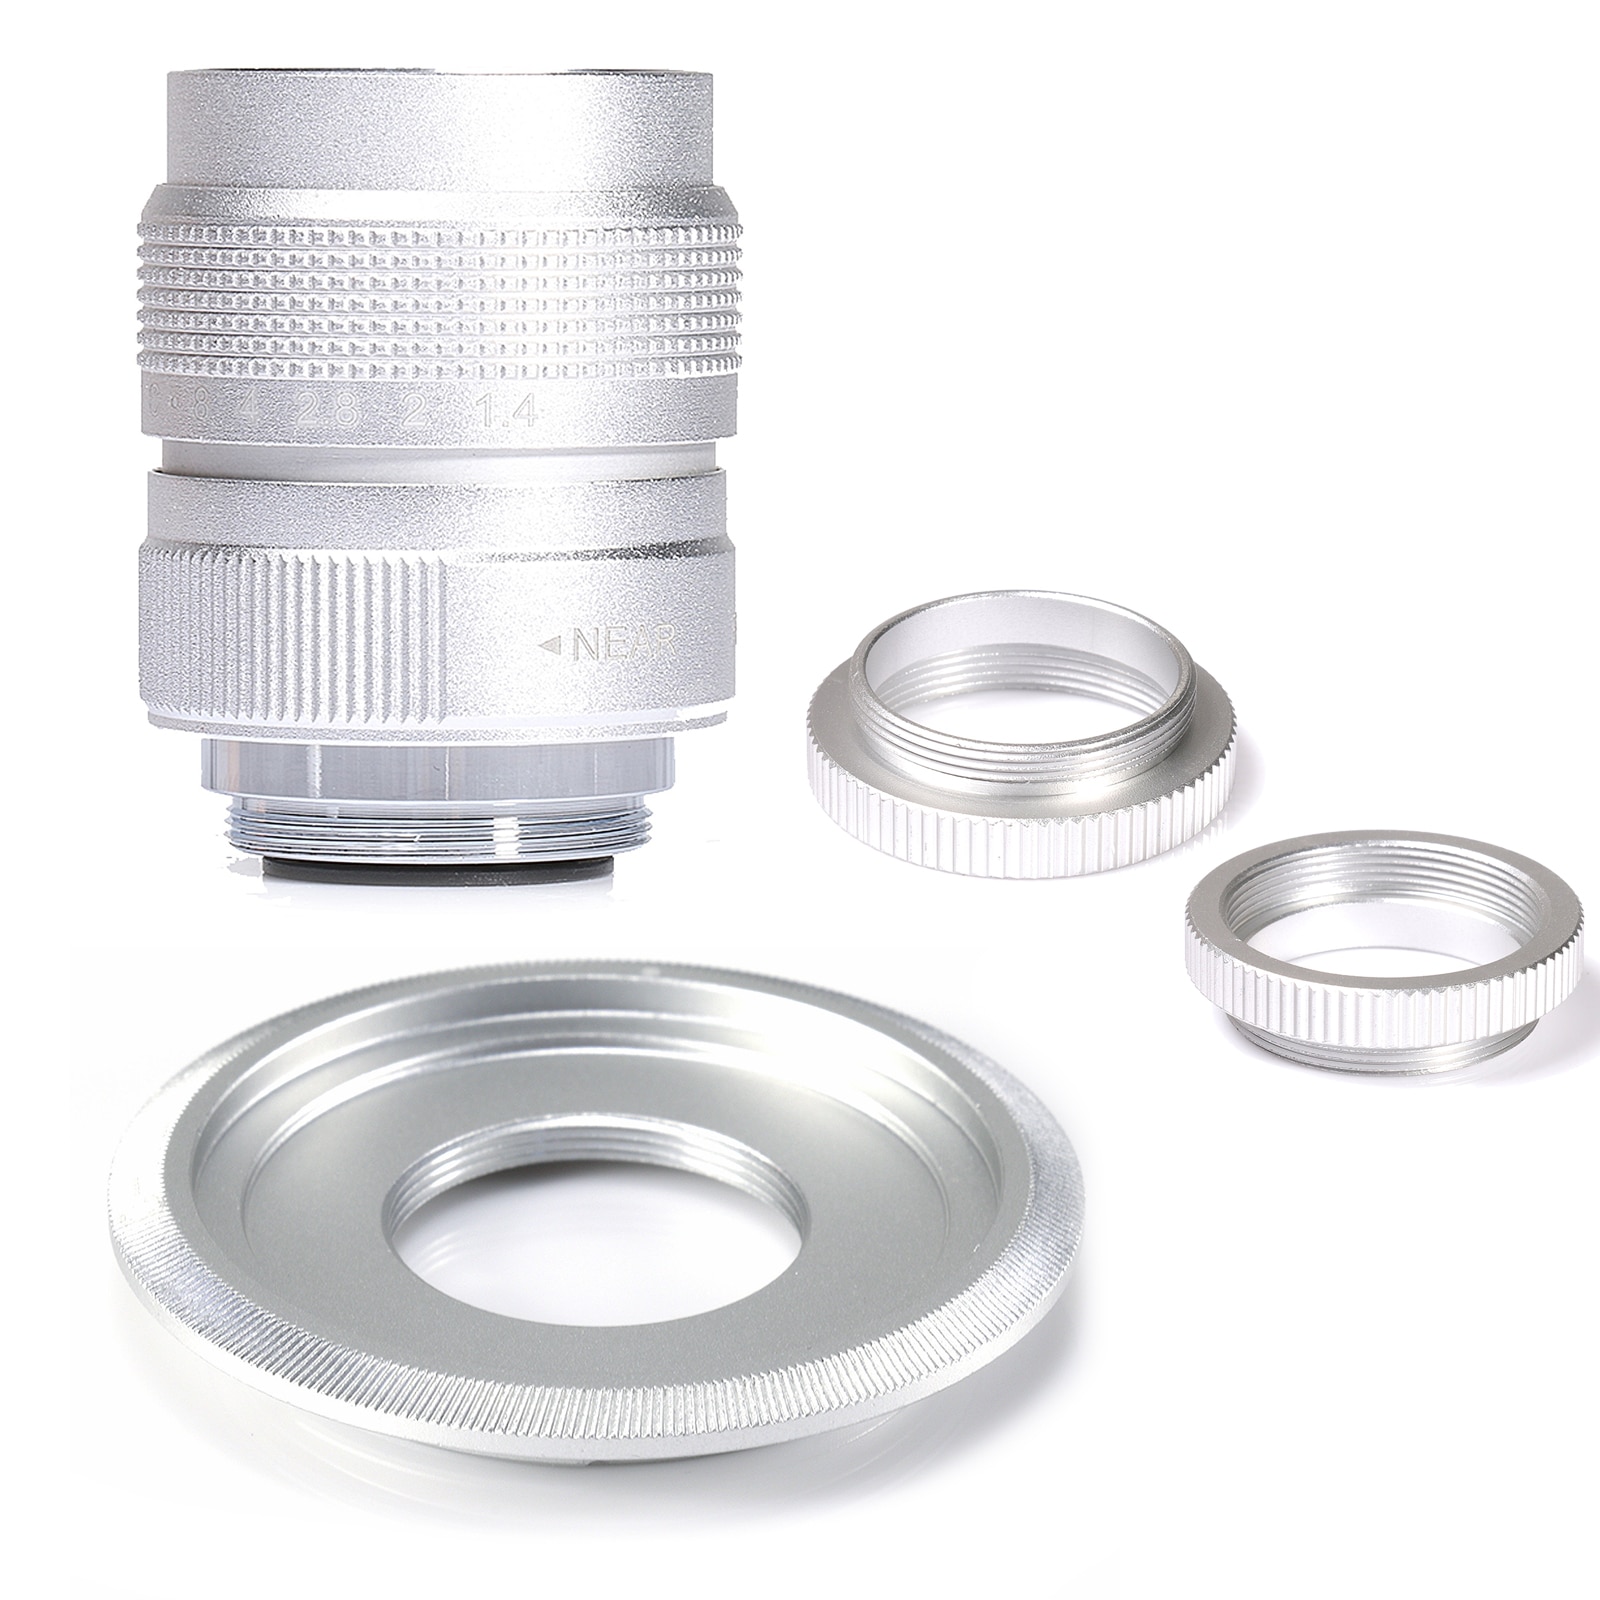 Zilver Fujian 25Mm F/1.4 APS-C Cctv Lens + Adapter Ring + 2 Macro Ring Voor P Anasonic/O Lympus Micro4/3 M4/3 Mirroless Camera